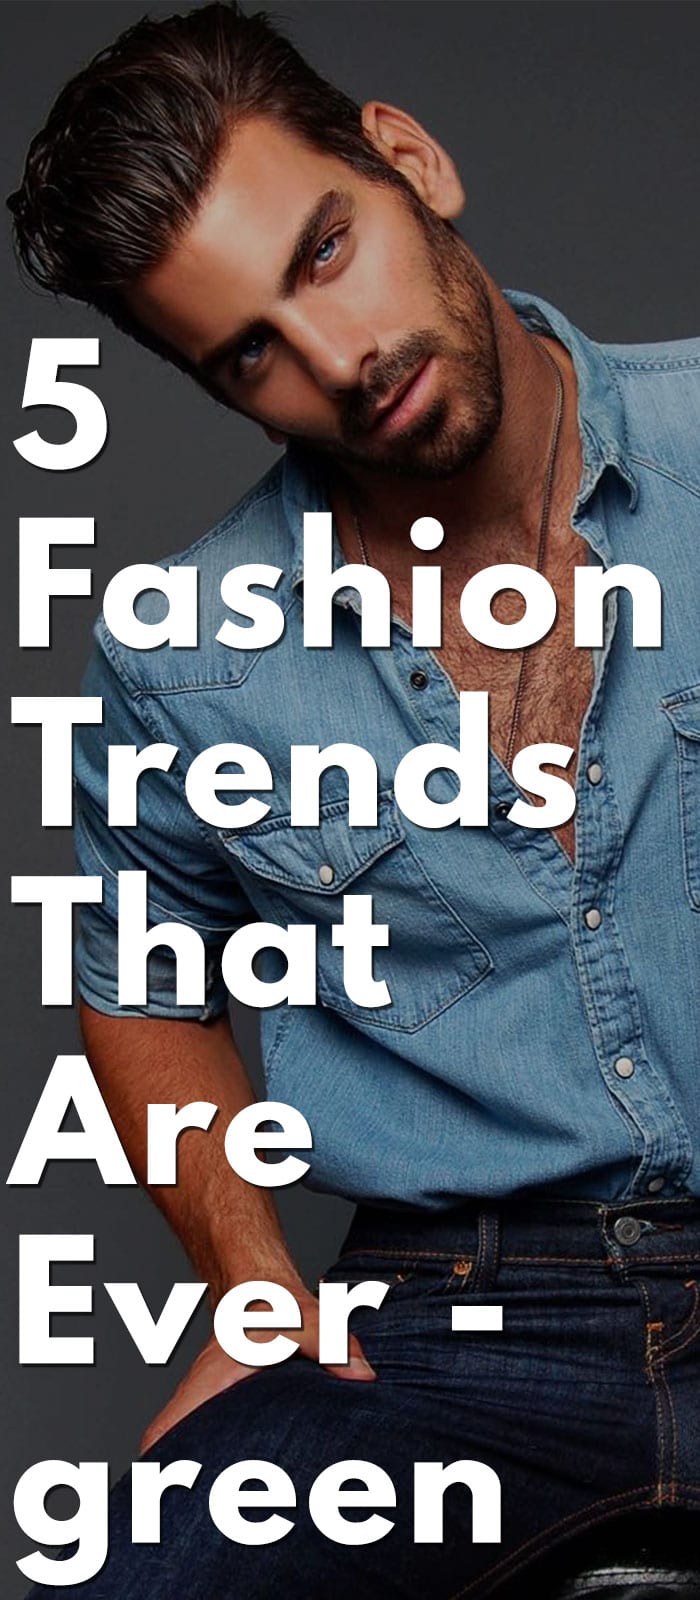 5 fashion trends